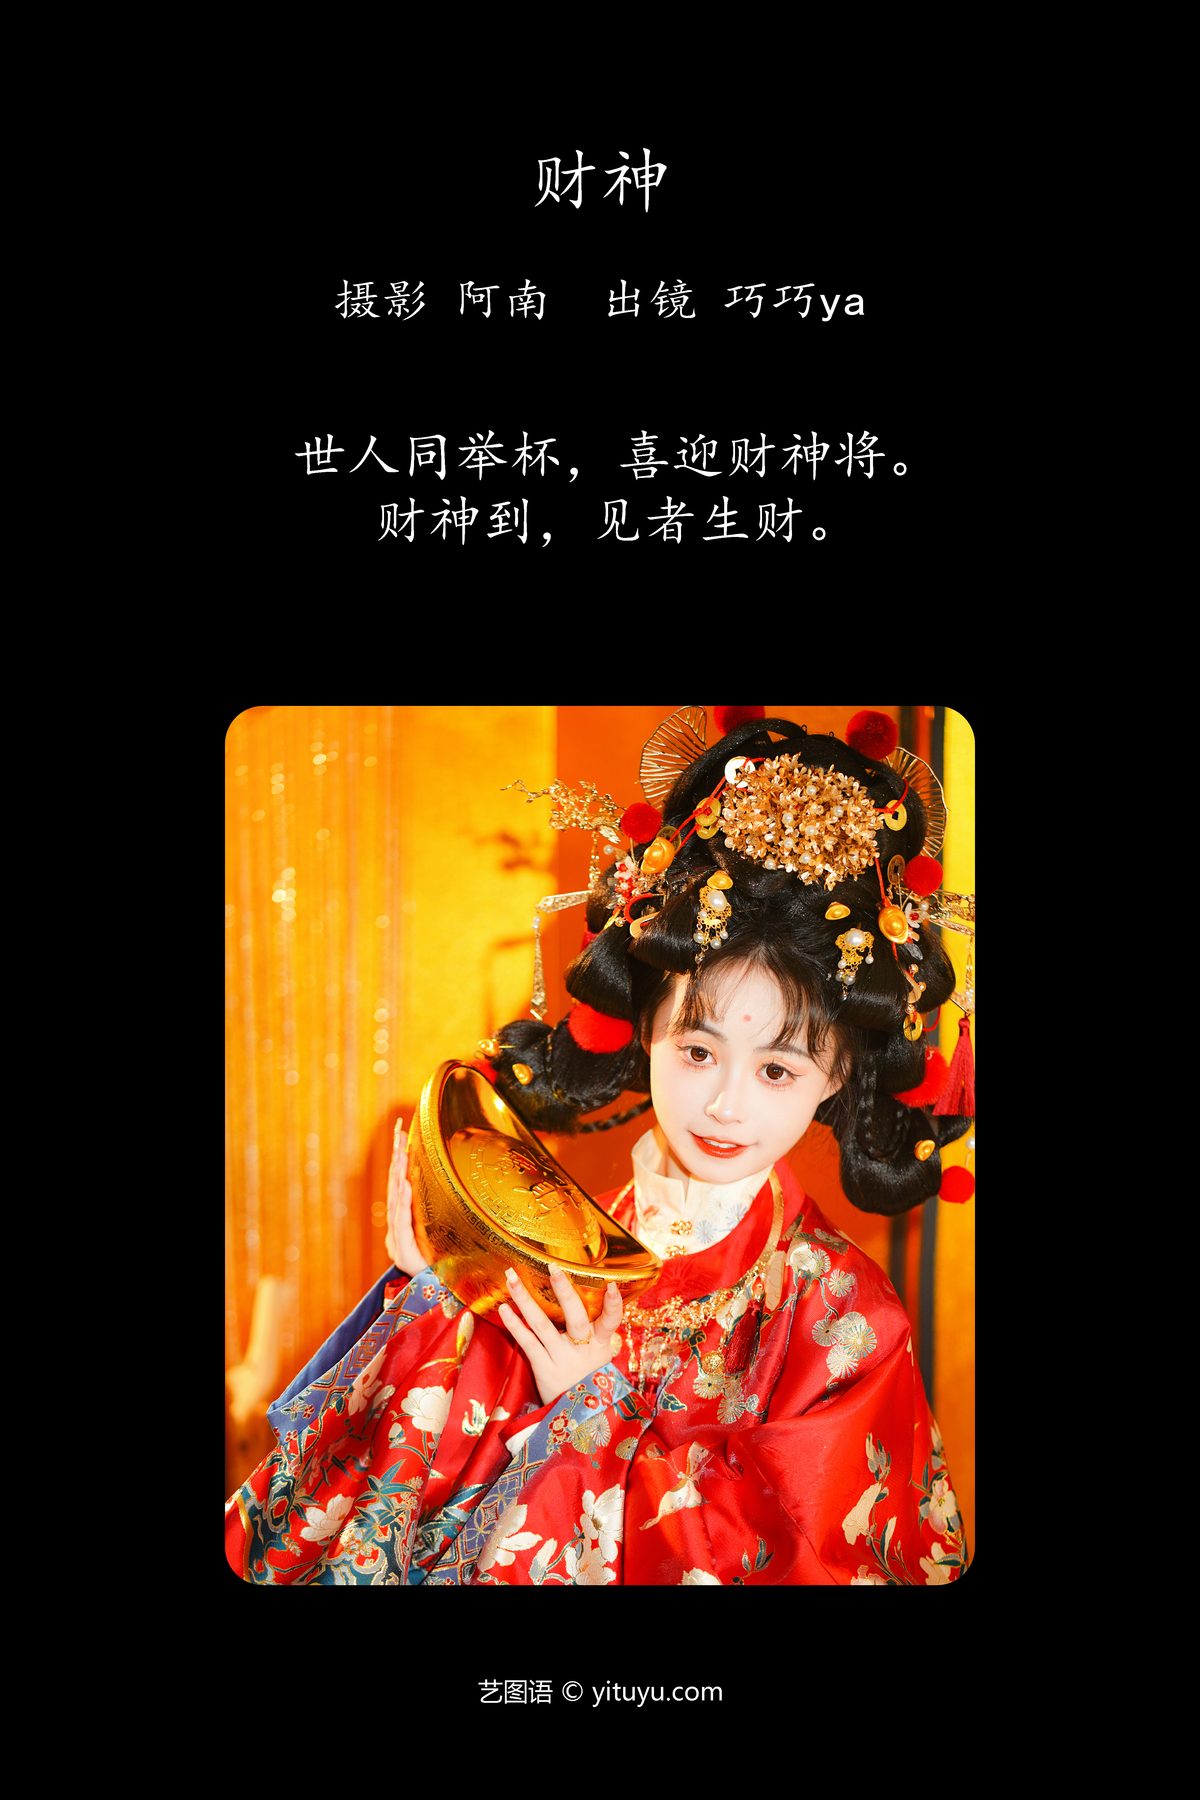 YiTuYu艺图语 Vol 6136 Qiao Qiao Ya 0001 5609339436.jpg